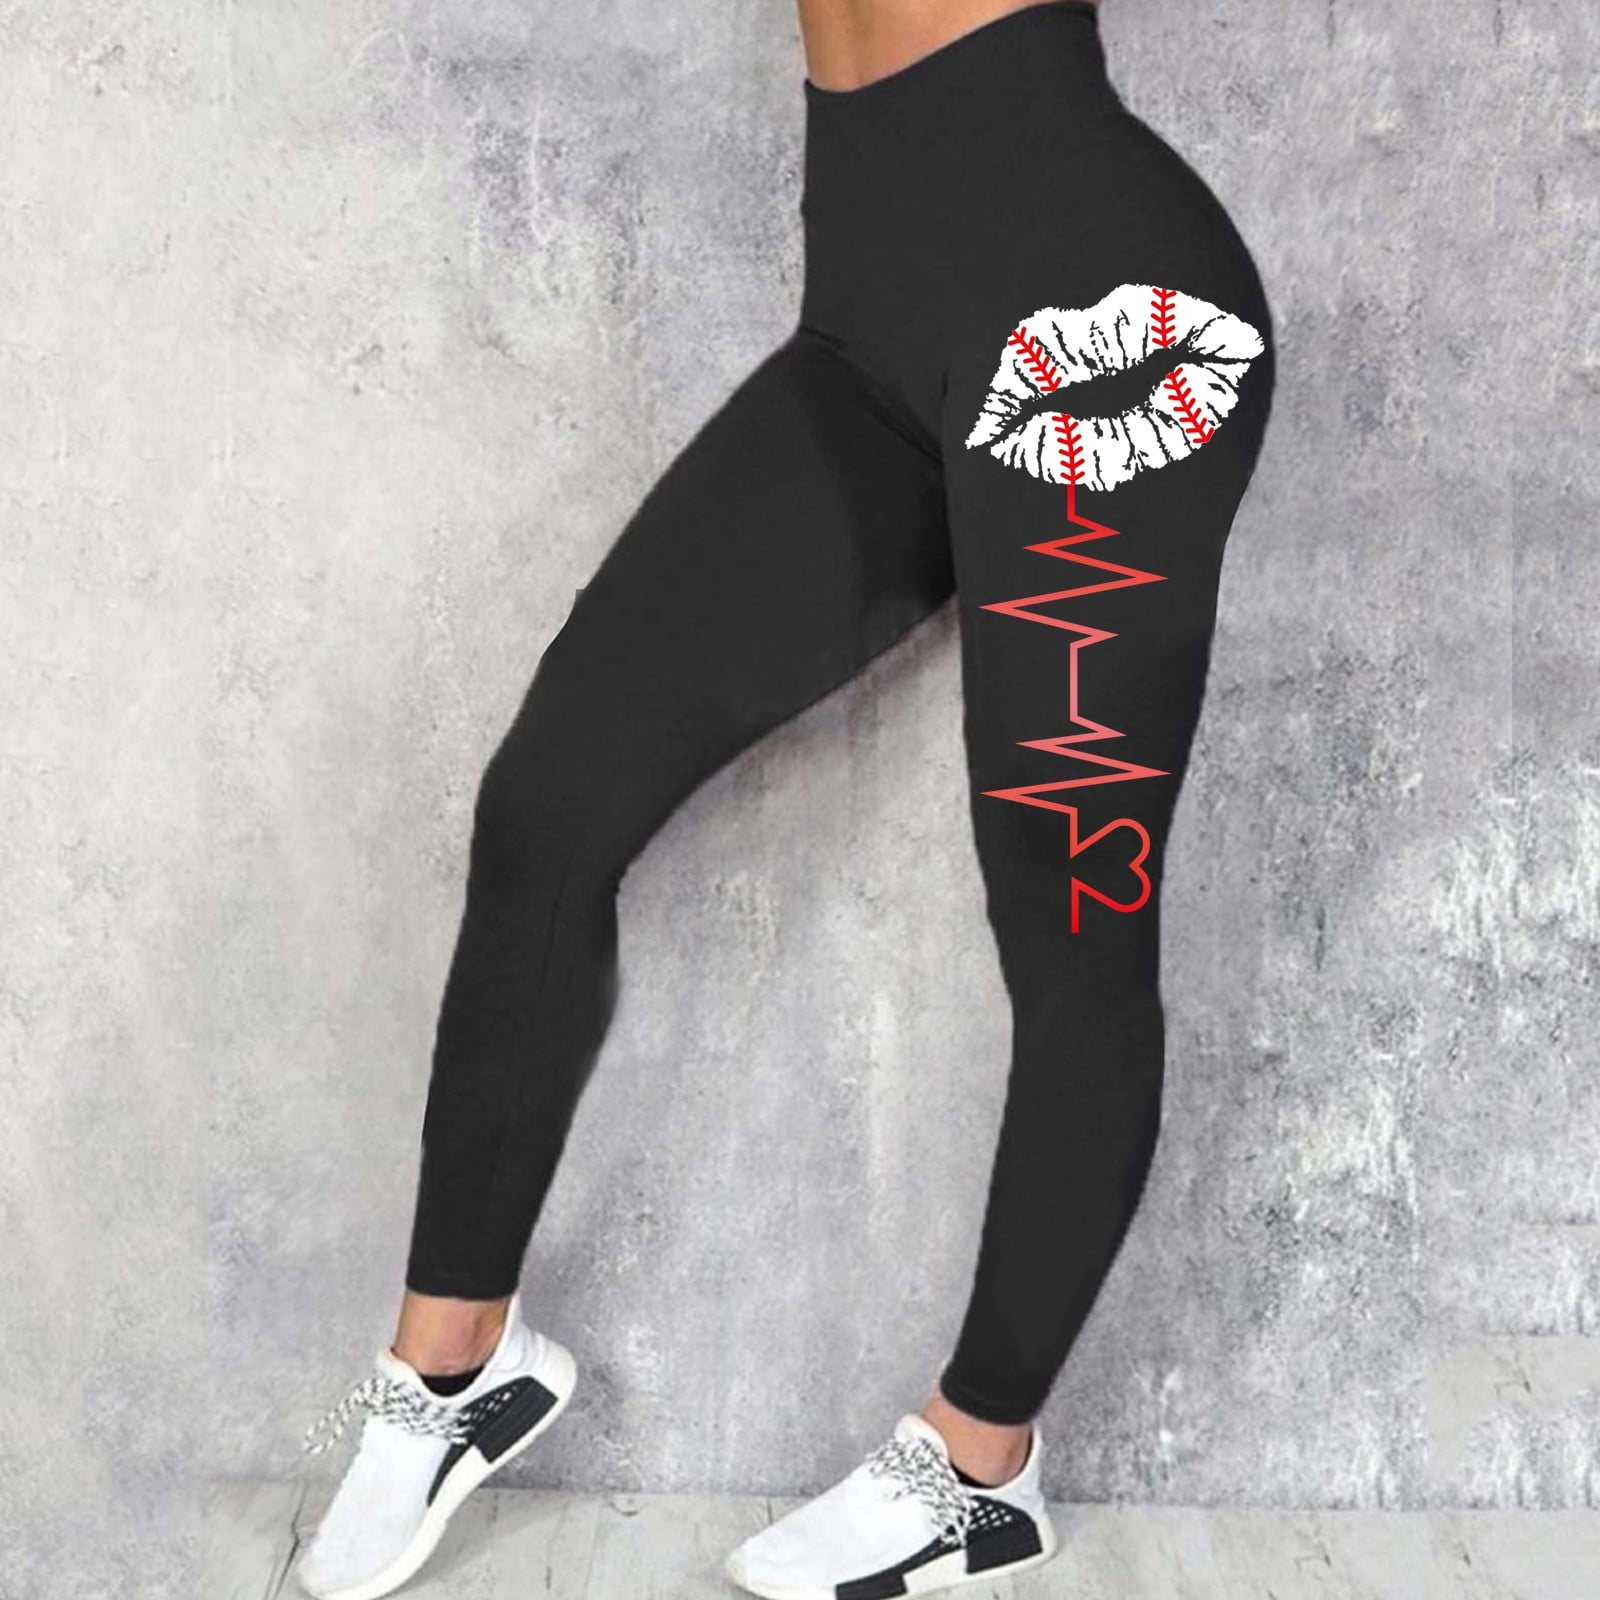 ASFGIMUJ Lined Leggings For Women Casual Comfort Baseball Prints Workout  Trousers Pants Thermal Pants Black XL 